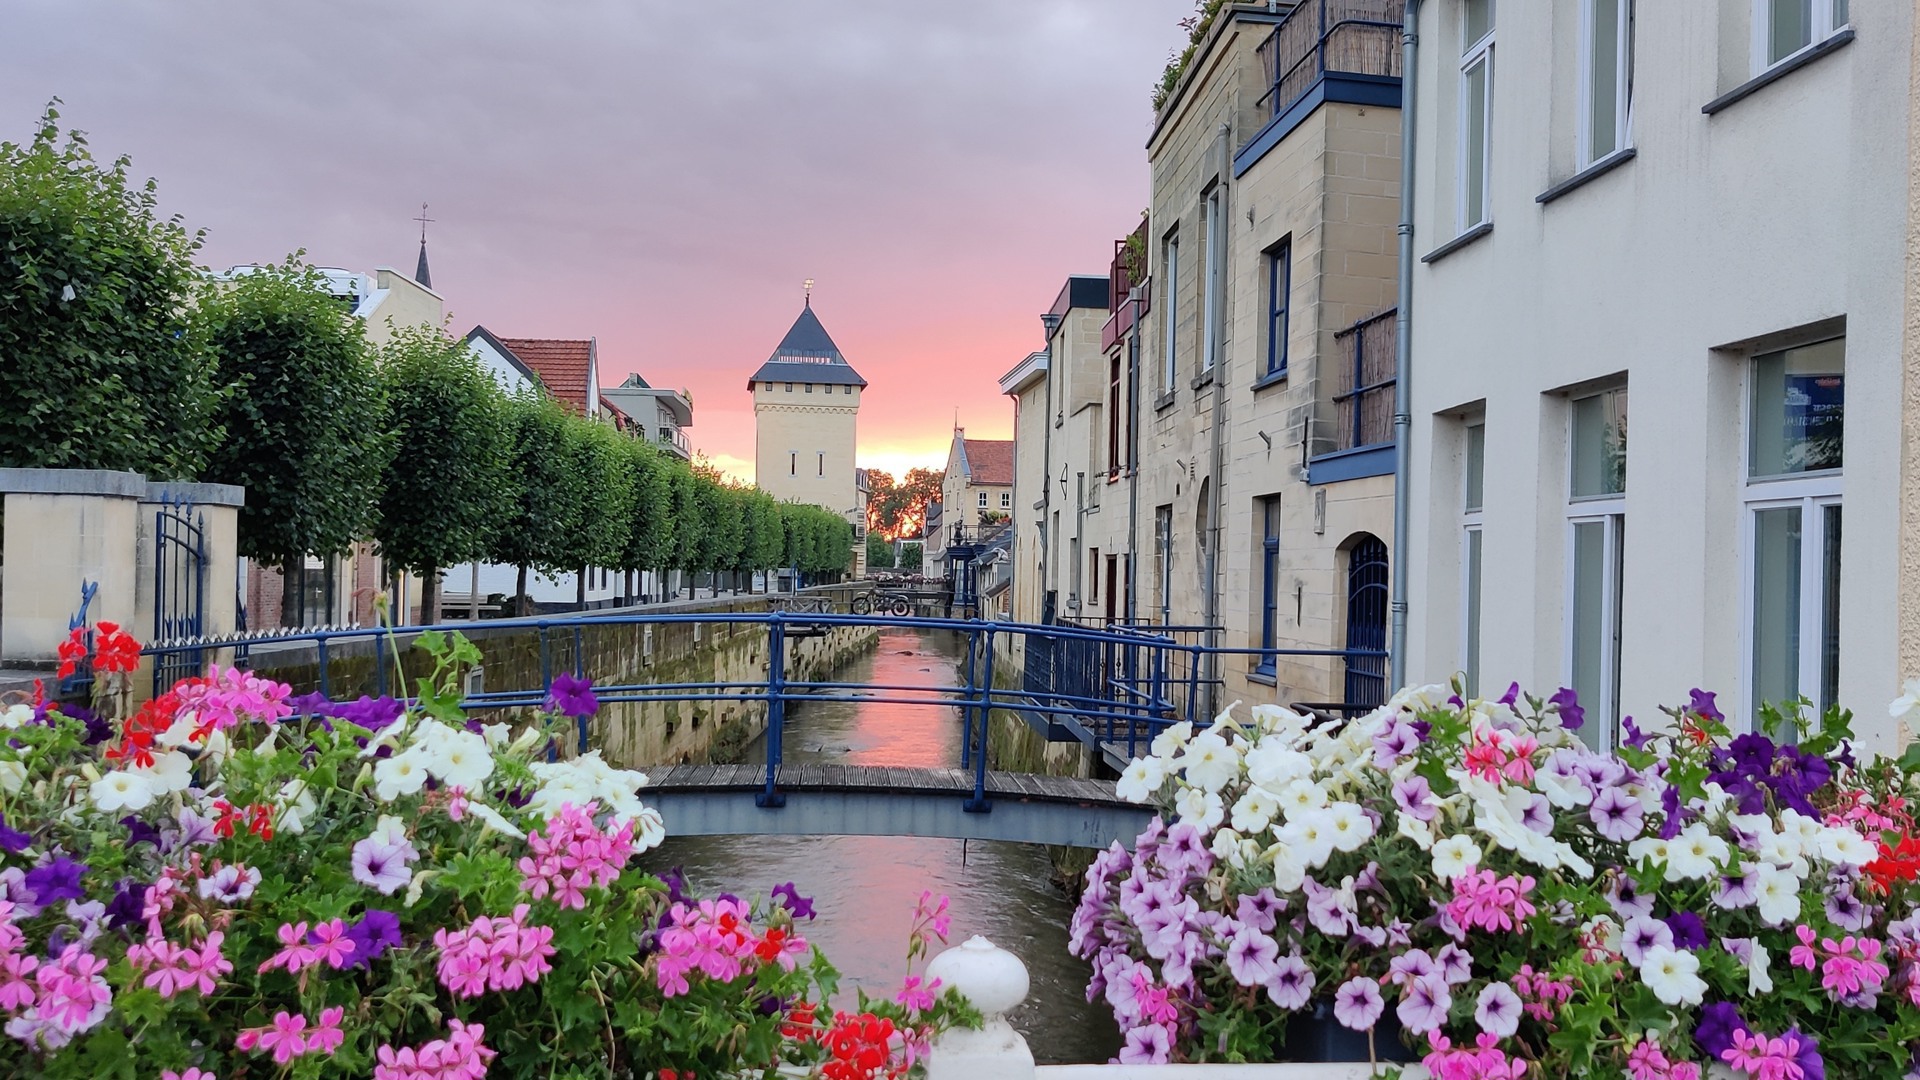 Explore the beautiful surroundings of Maastricht!